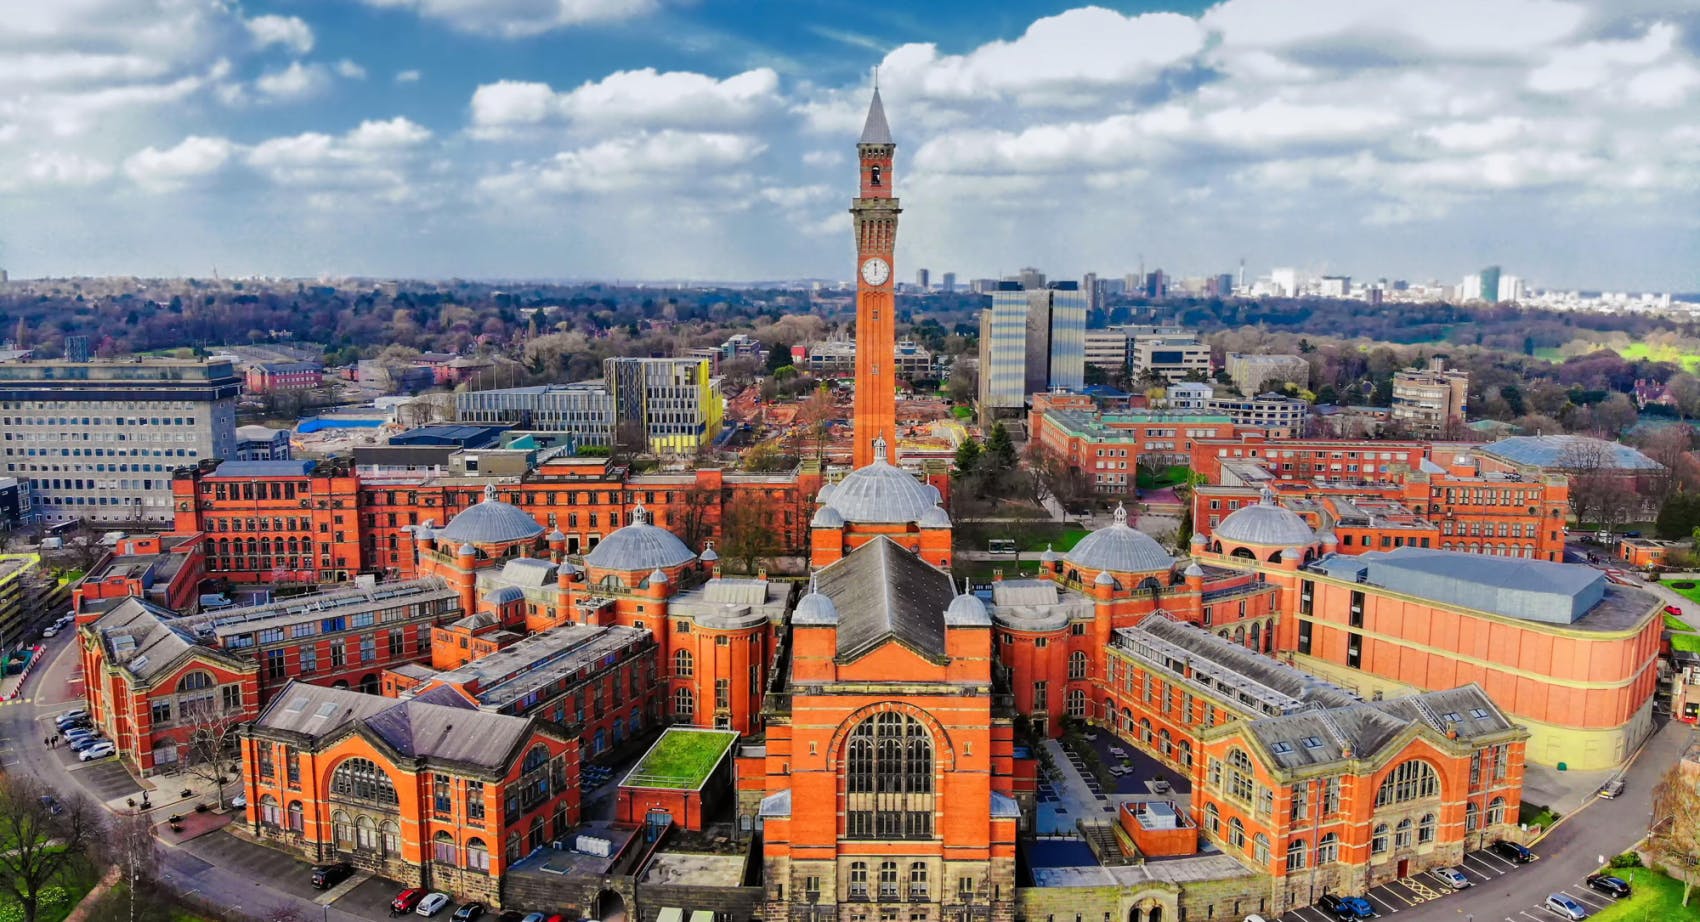 View over the city of Birmingham, UK.